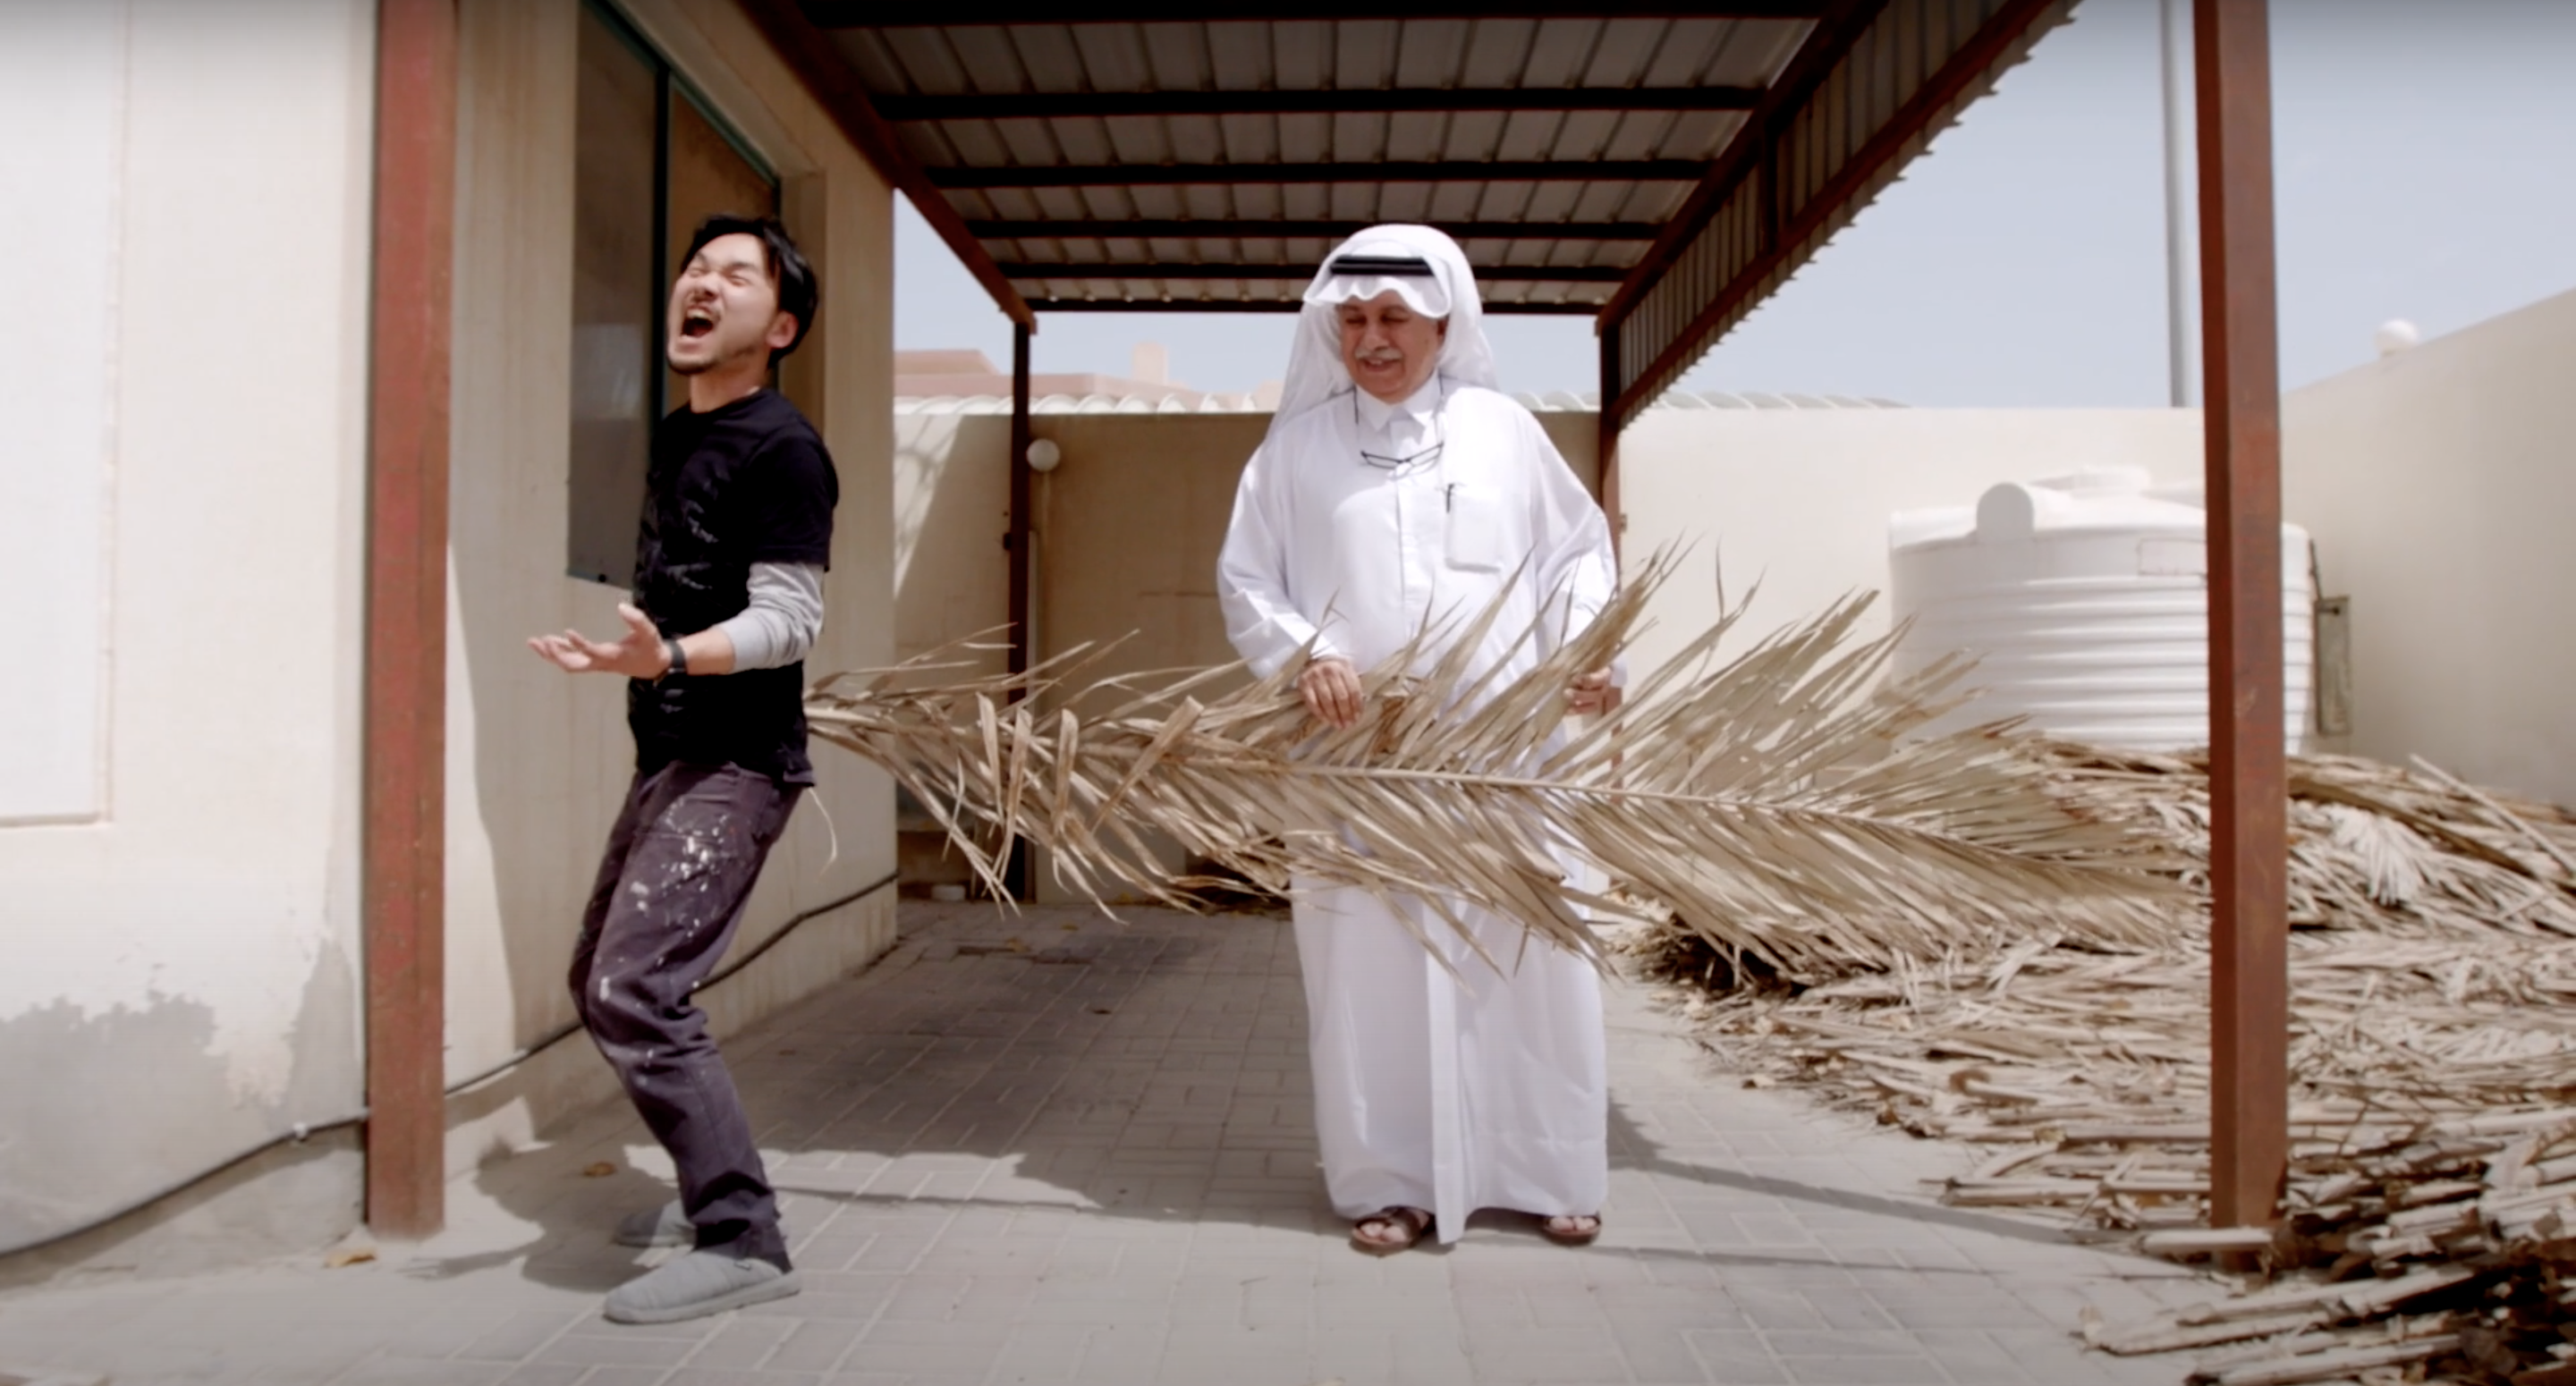 Japanese artist Hayaki Nishigaki and Qatari artist Yousef Ahmad holding a giant palm frond at the artists' studio in Doha.